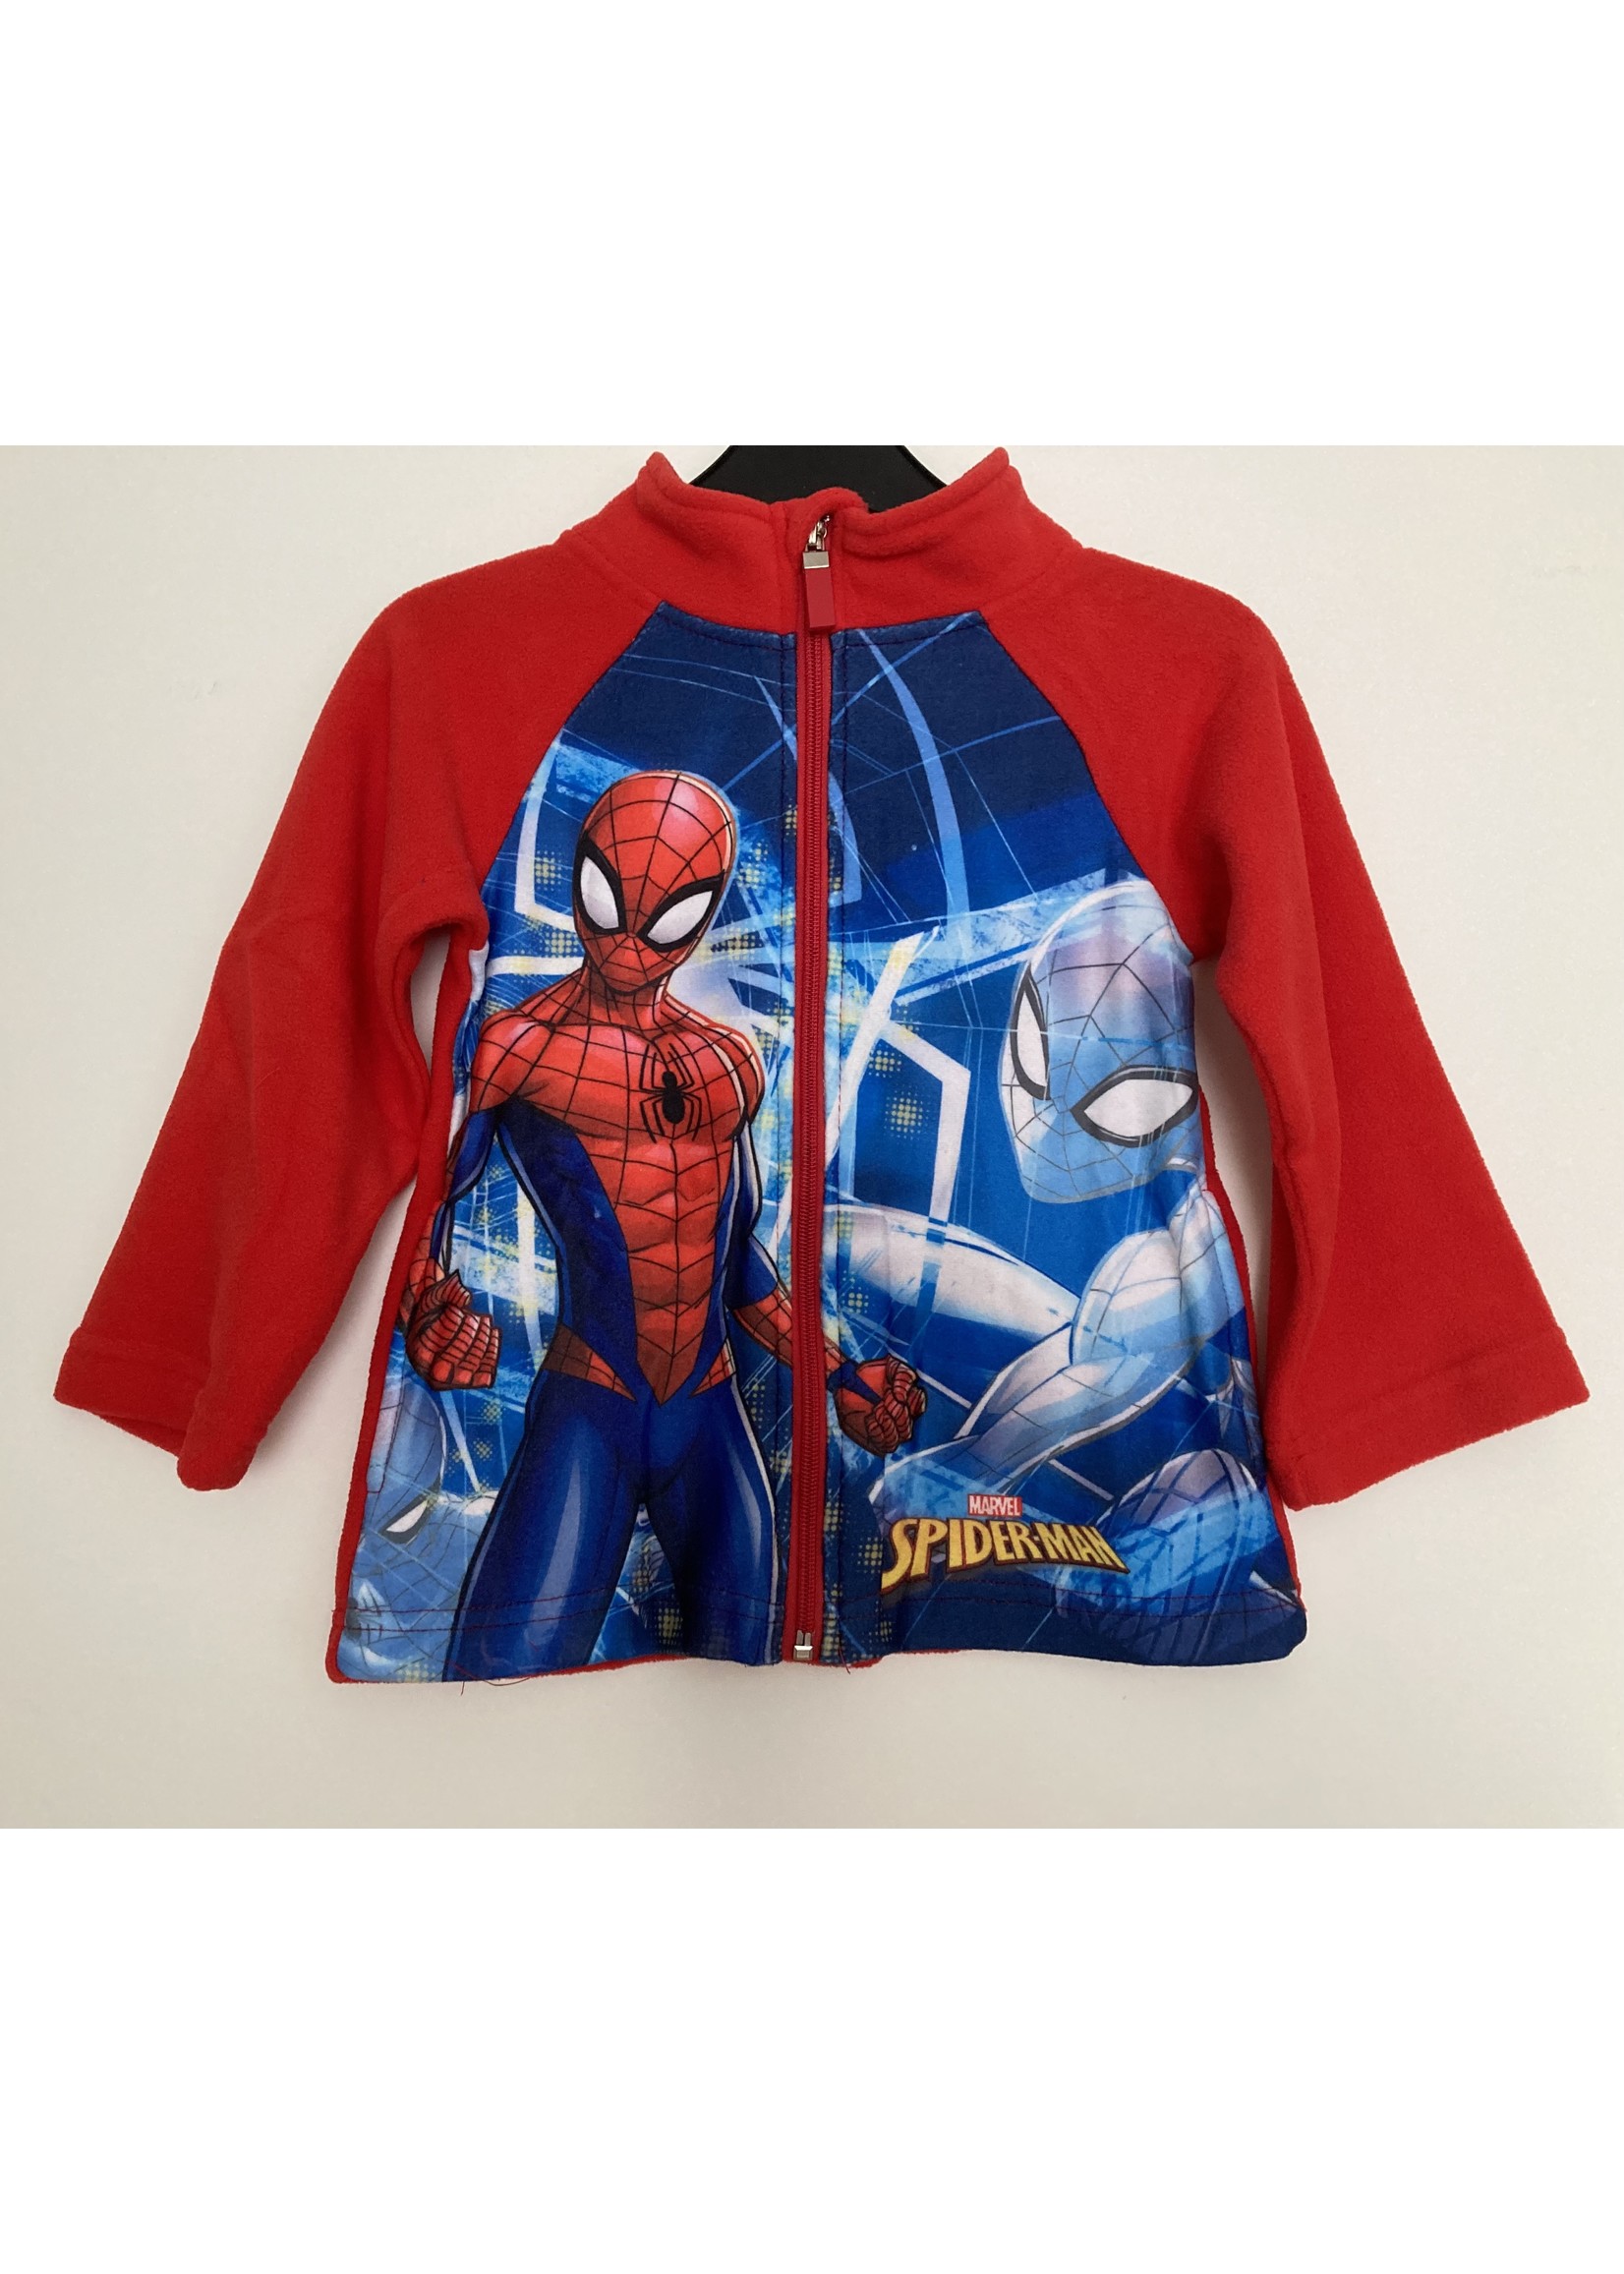 Marvel Spiderman fleece vest from Marvel red